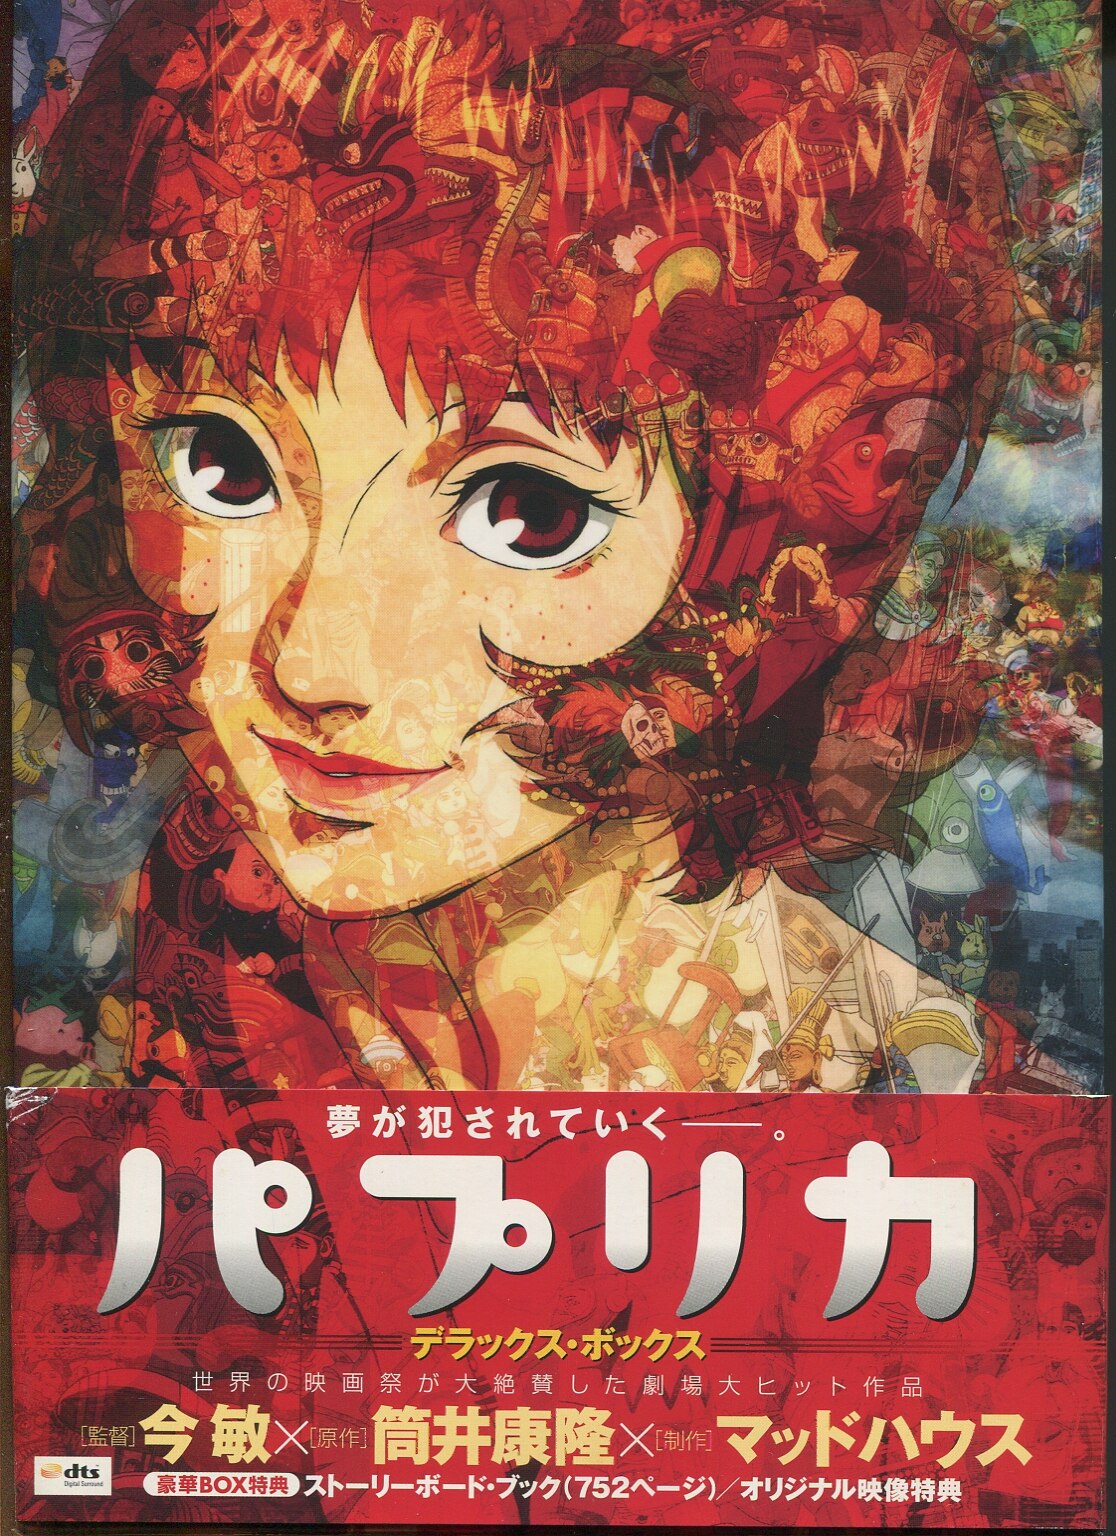 Anime DVD paprika deluxe box | Mandarake Online Shop